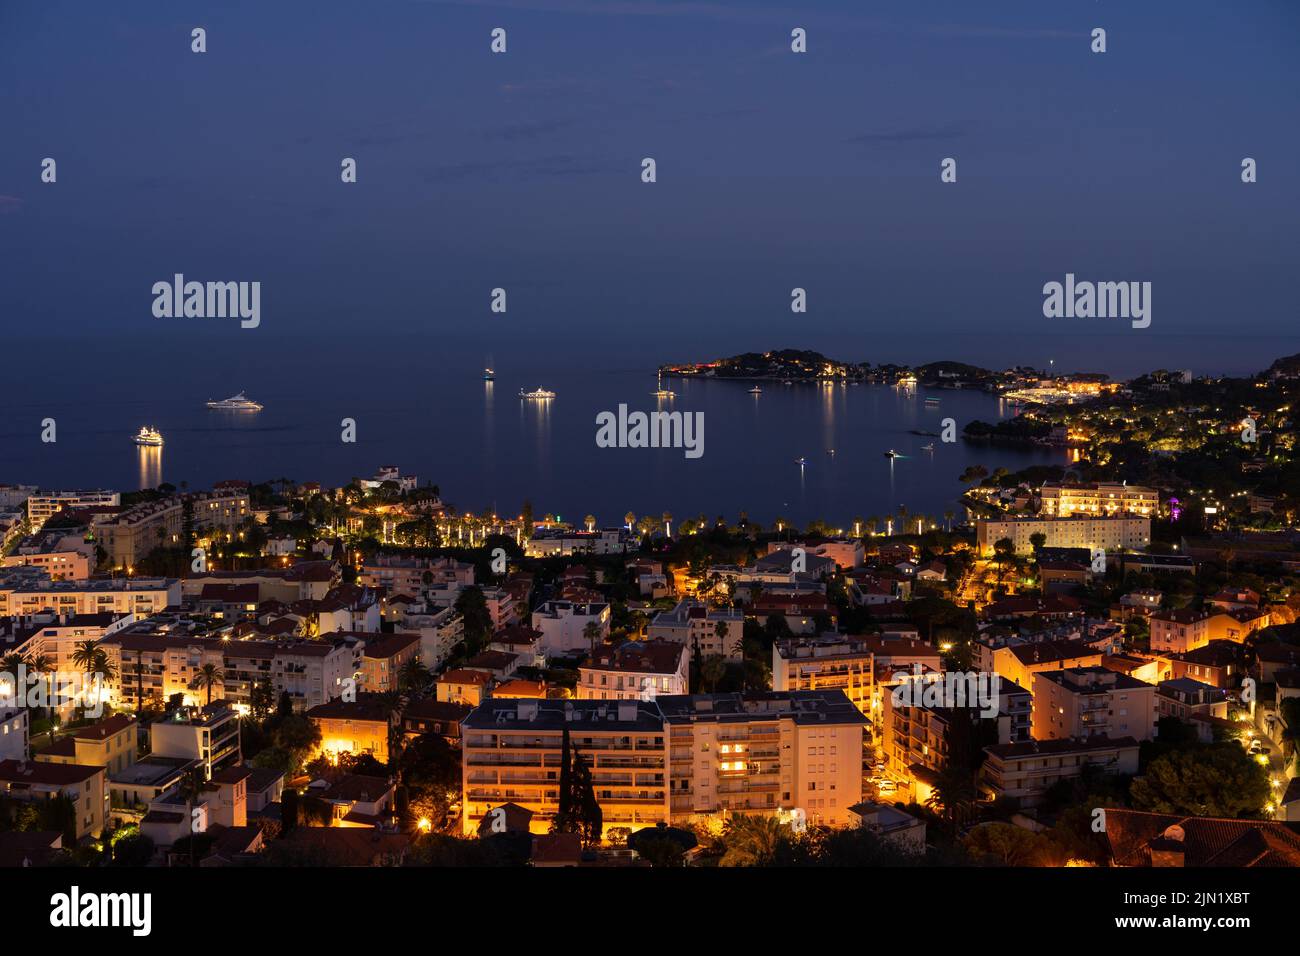 Panorama de la ciudad costera de Beaulieu-sur-Mer, Riviera Francesa - Côte d'Azur, por la noche, con Saint-Jean-Cap-Ferrat a la derecha Foto de stock